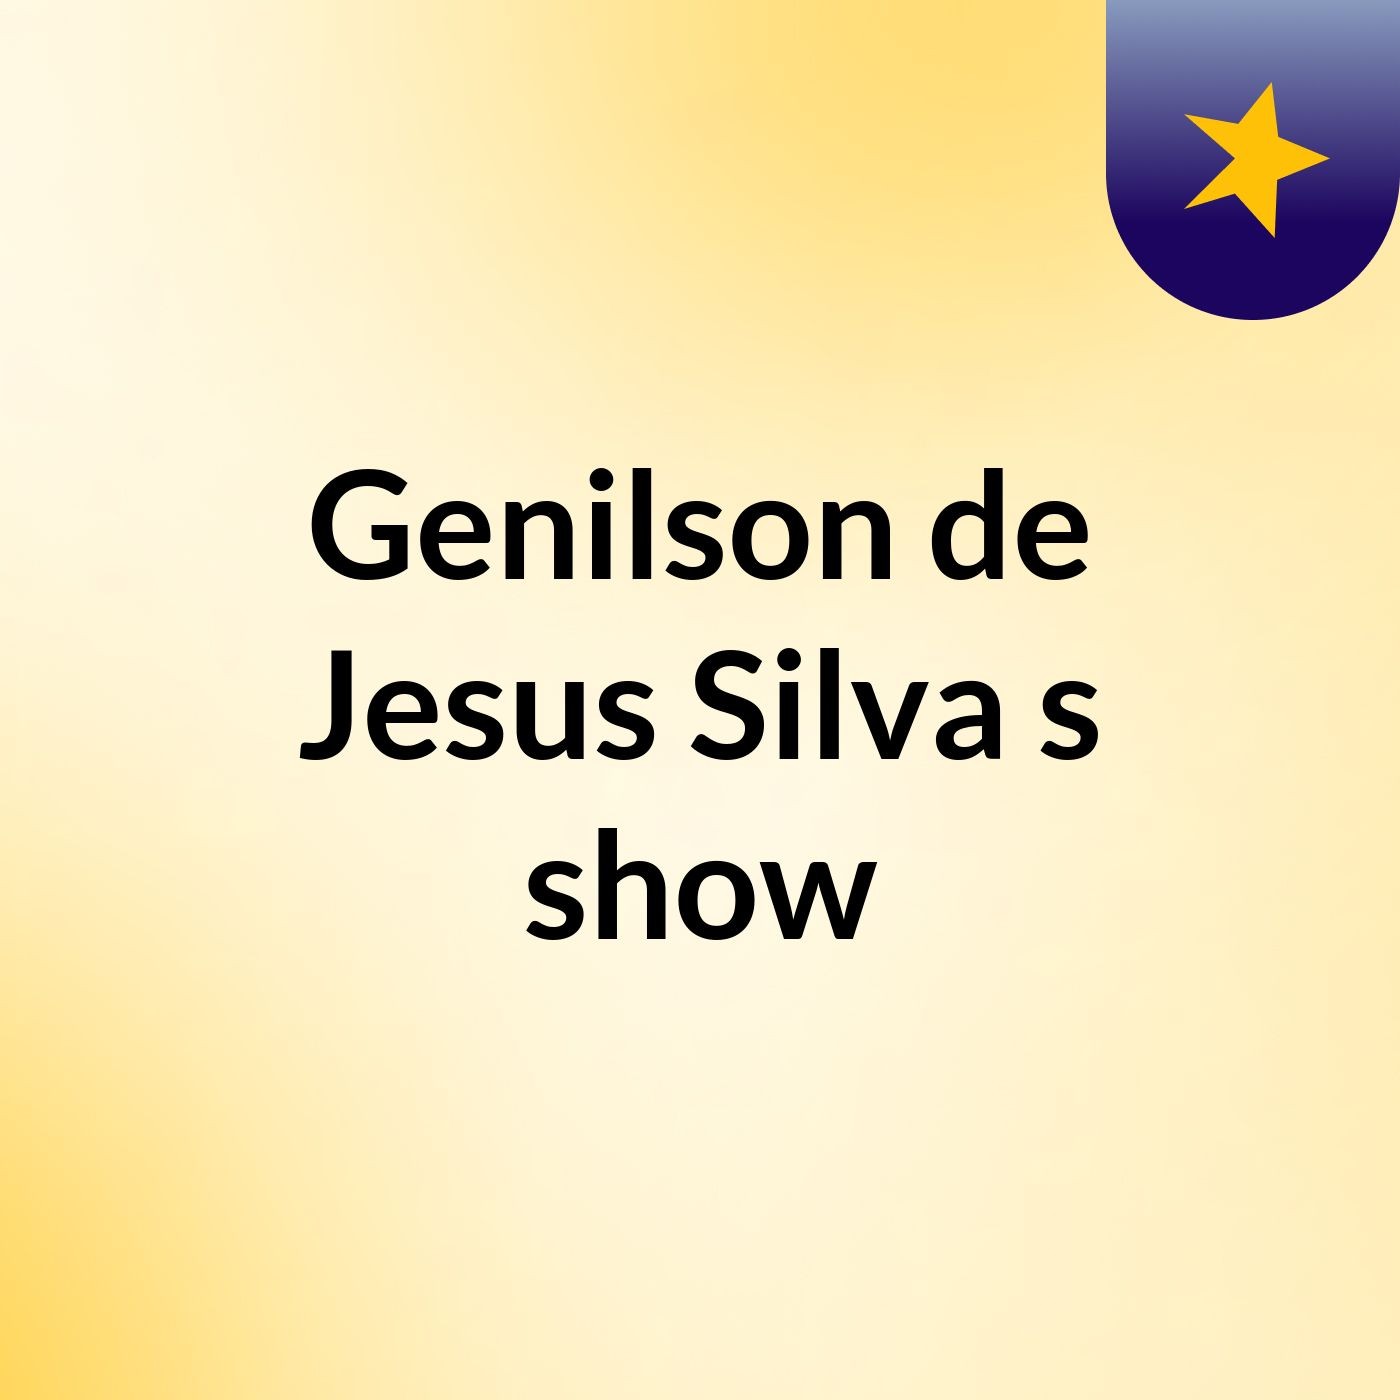 Genilson de Jesus Silva's show